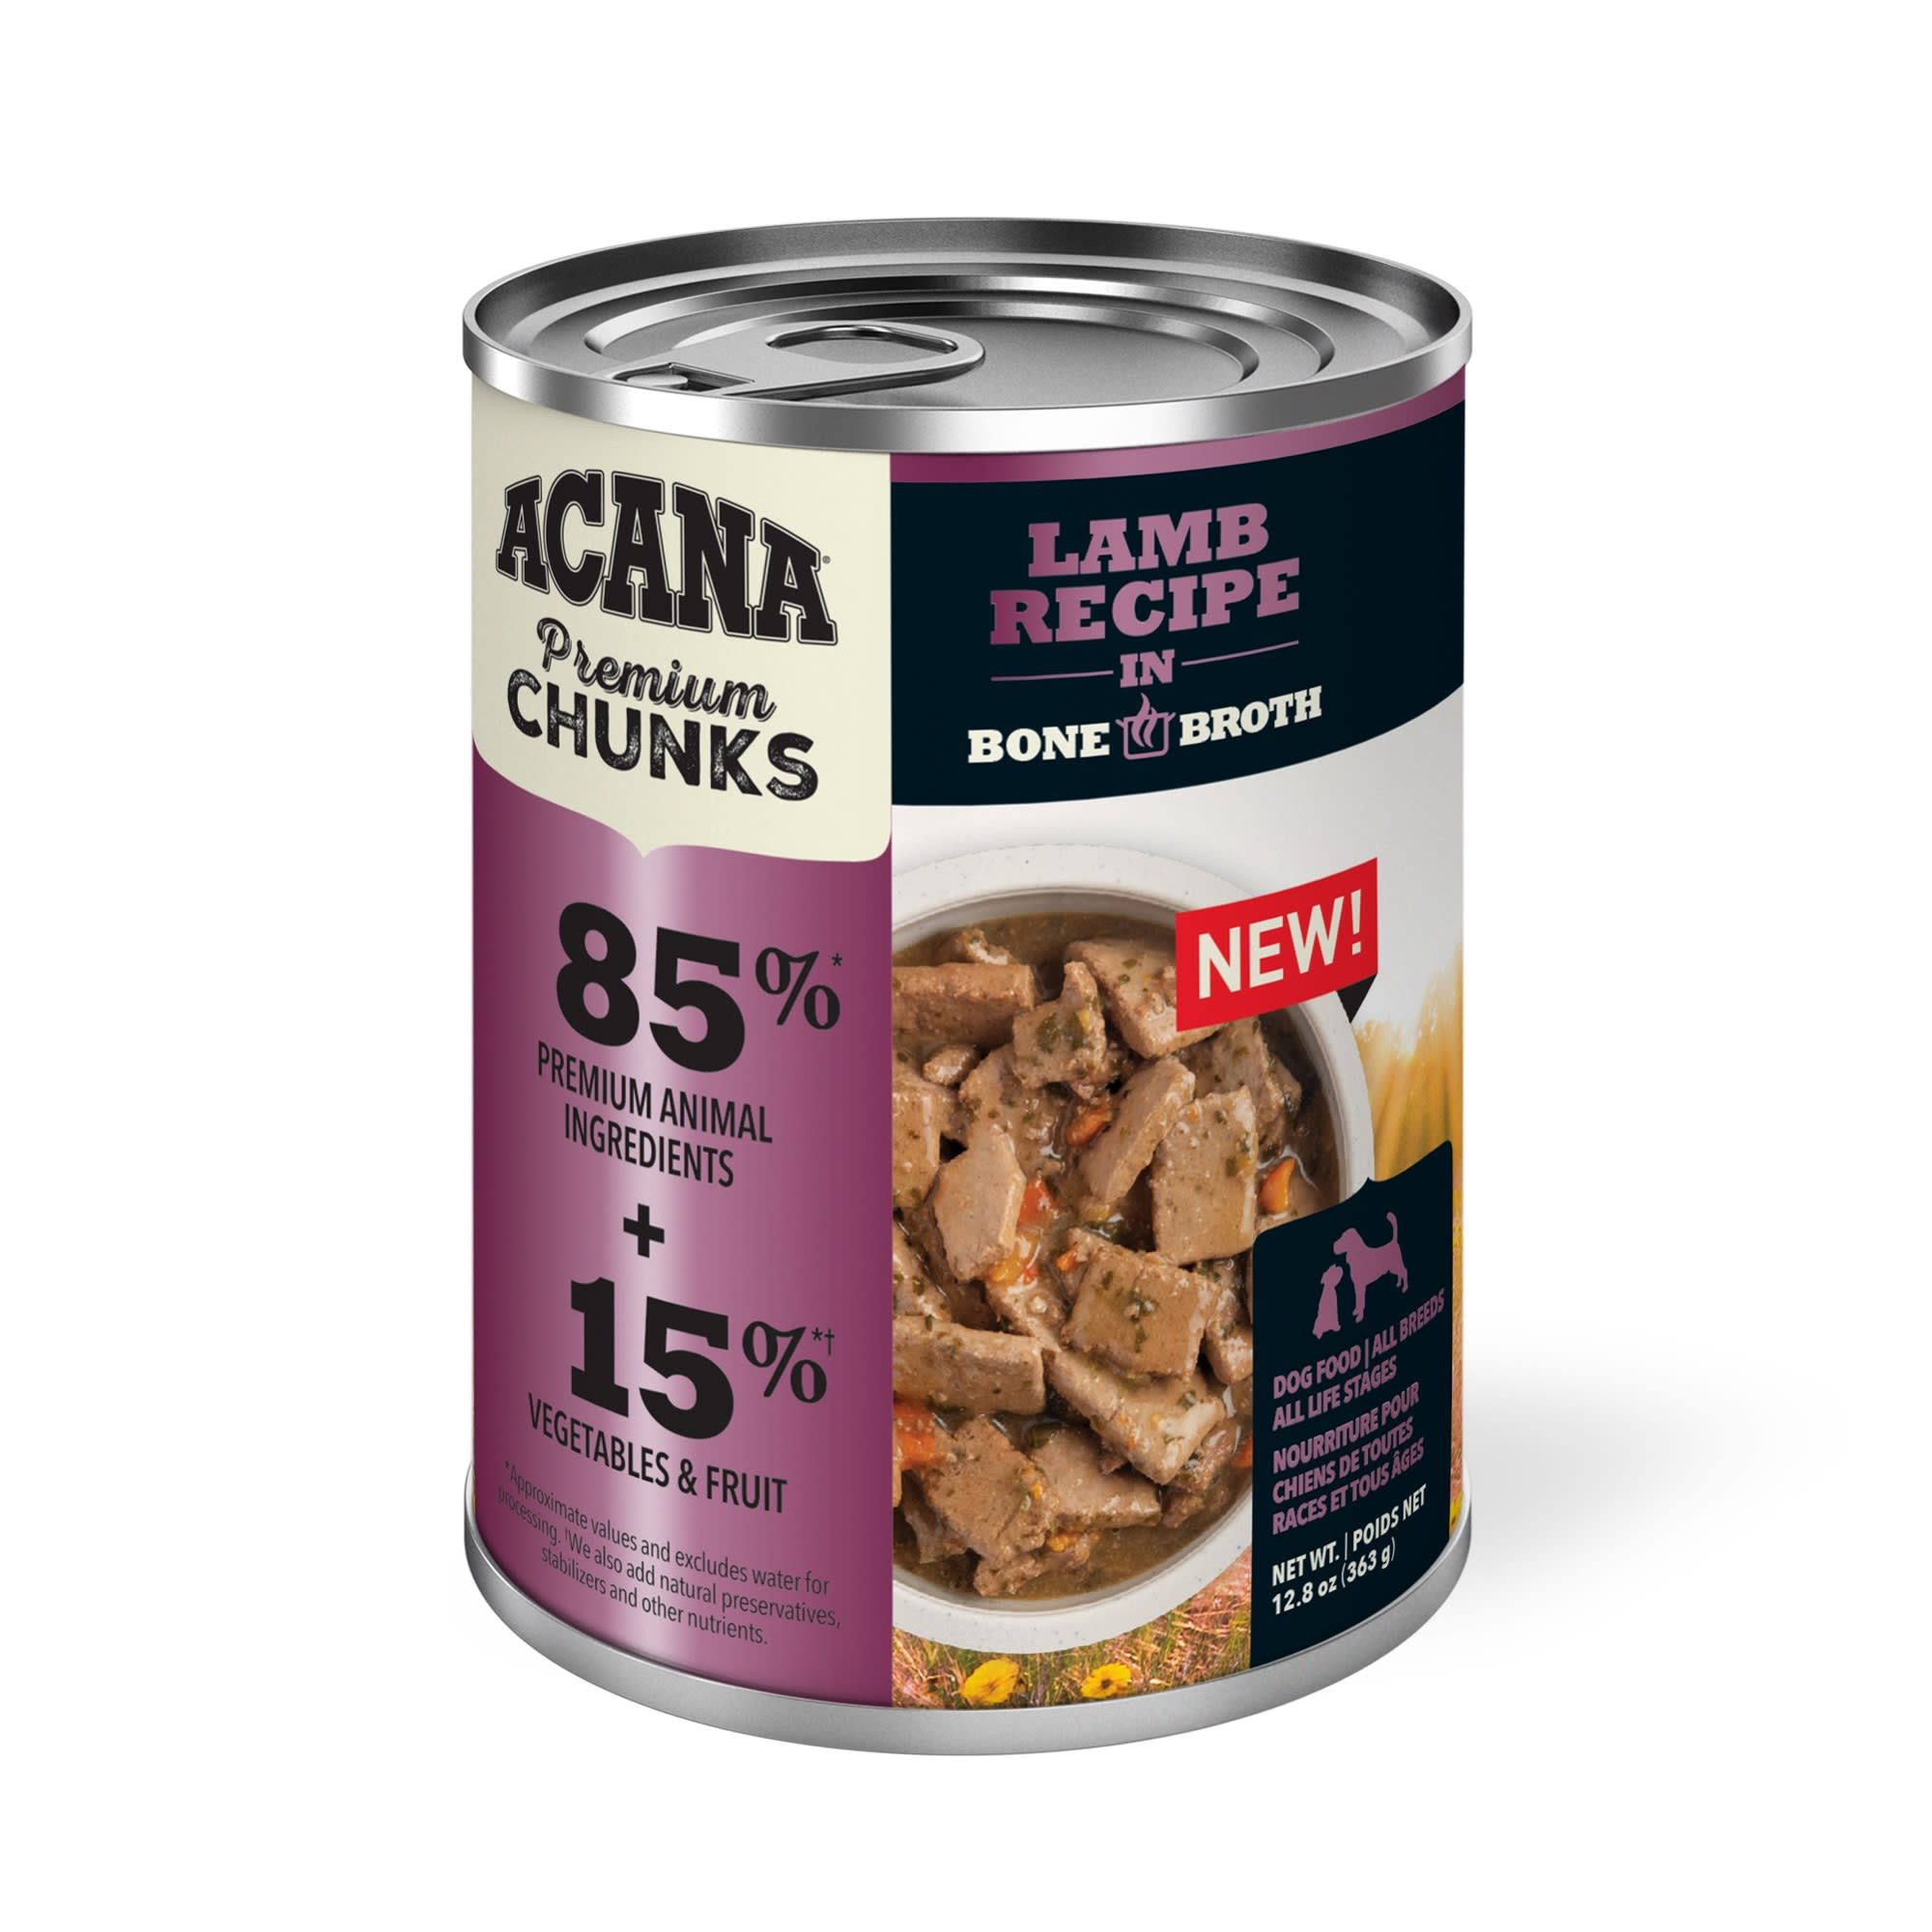 ACANA Lamb Recipe in Bone Broth Premium Chunks Dog Food - 12.8 oz